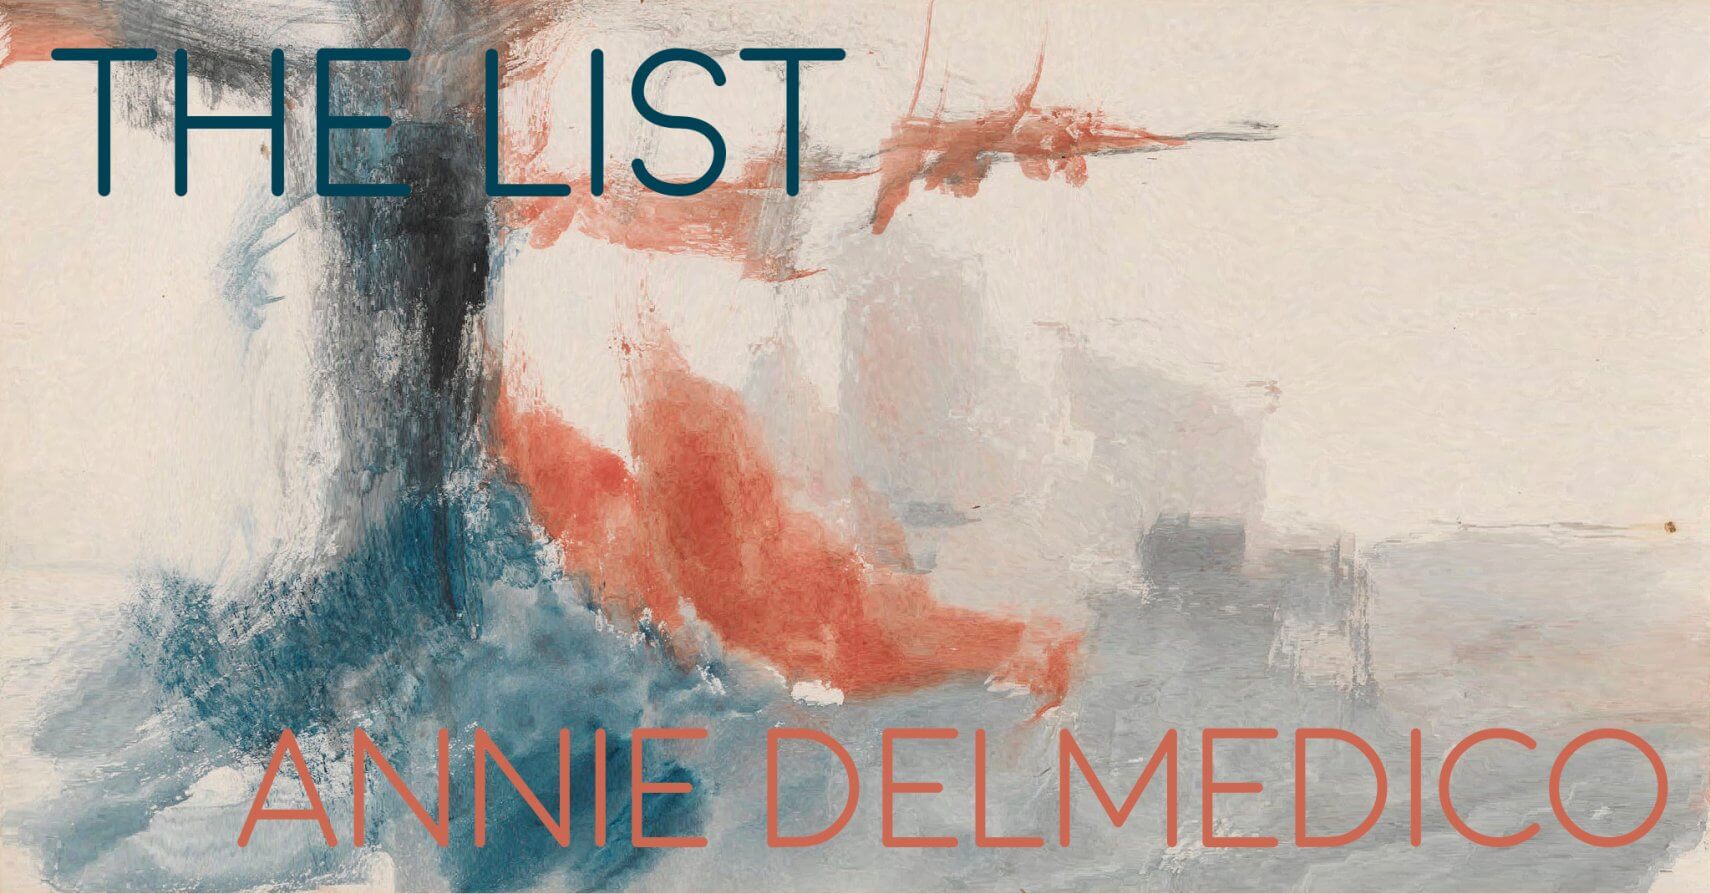 THE LIST by Annie Delmedico